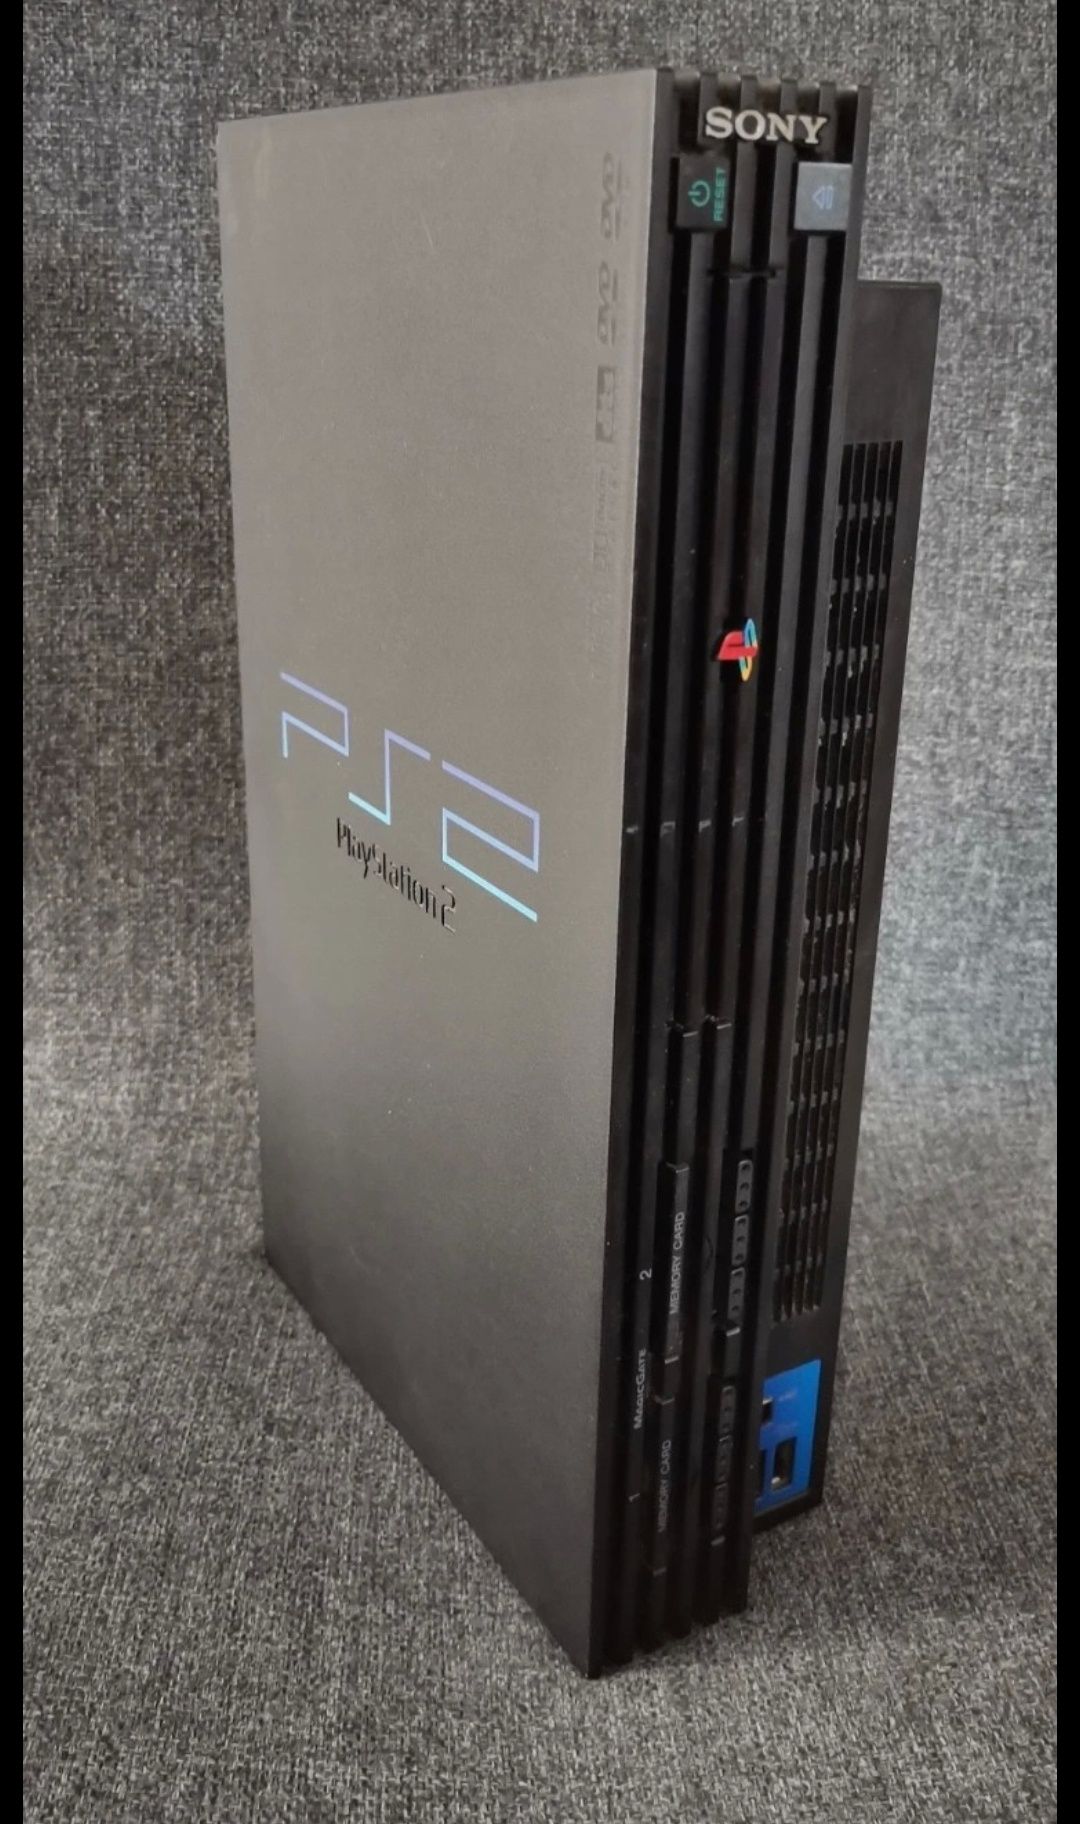 Consola PlayStation 2